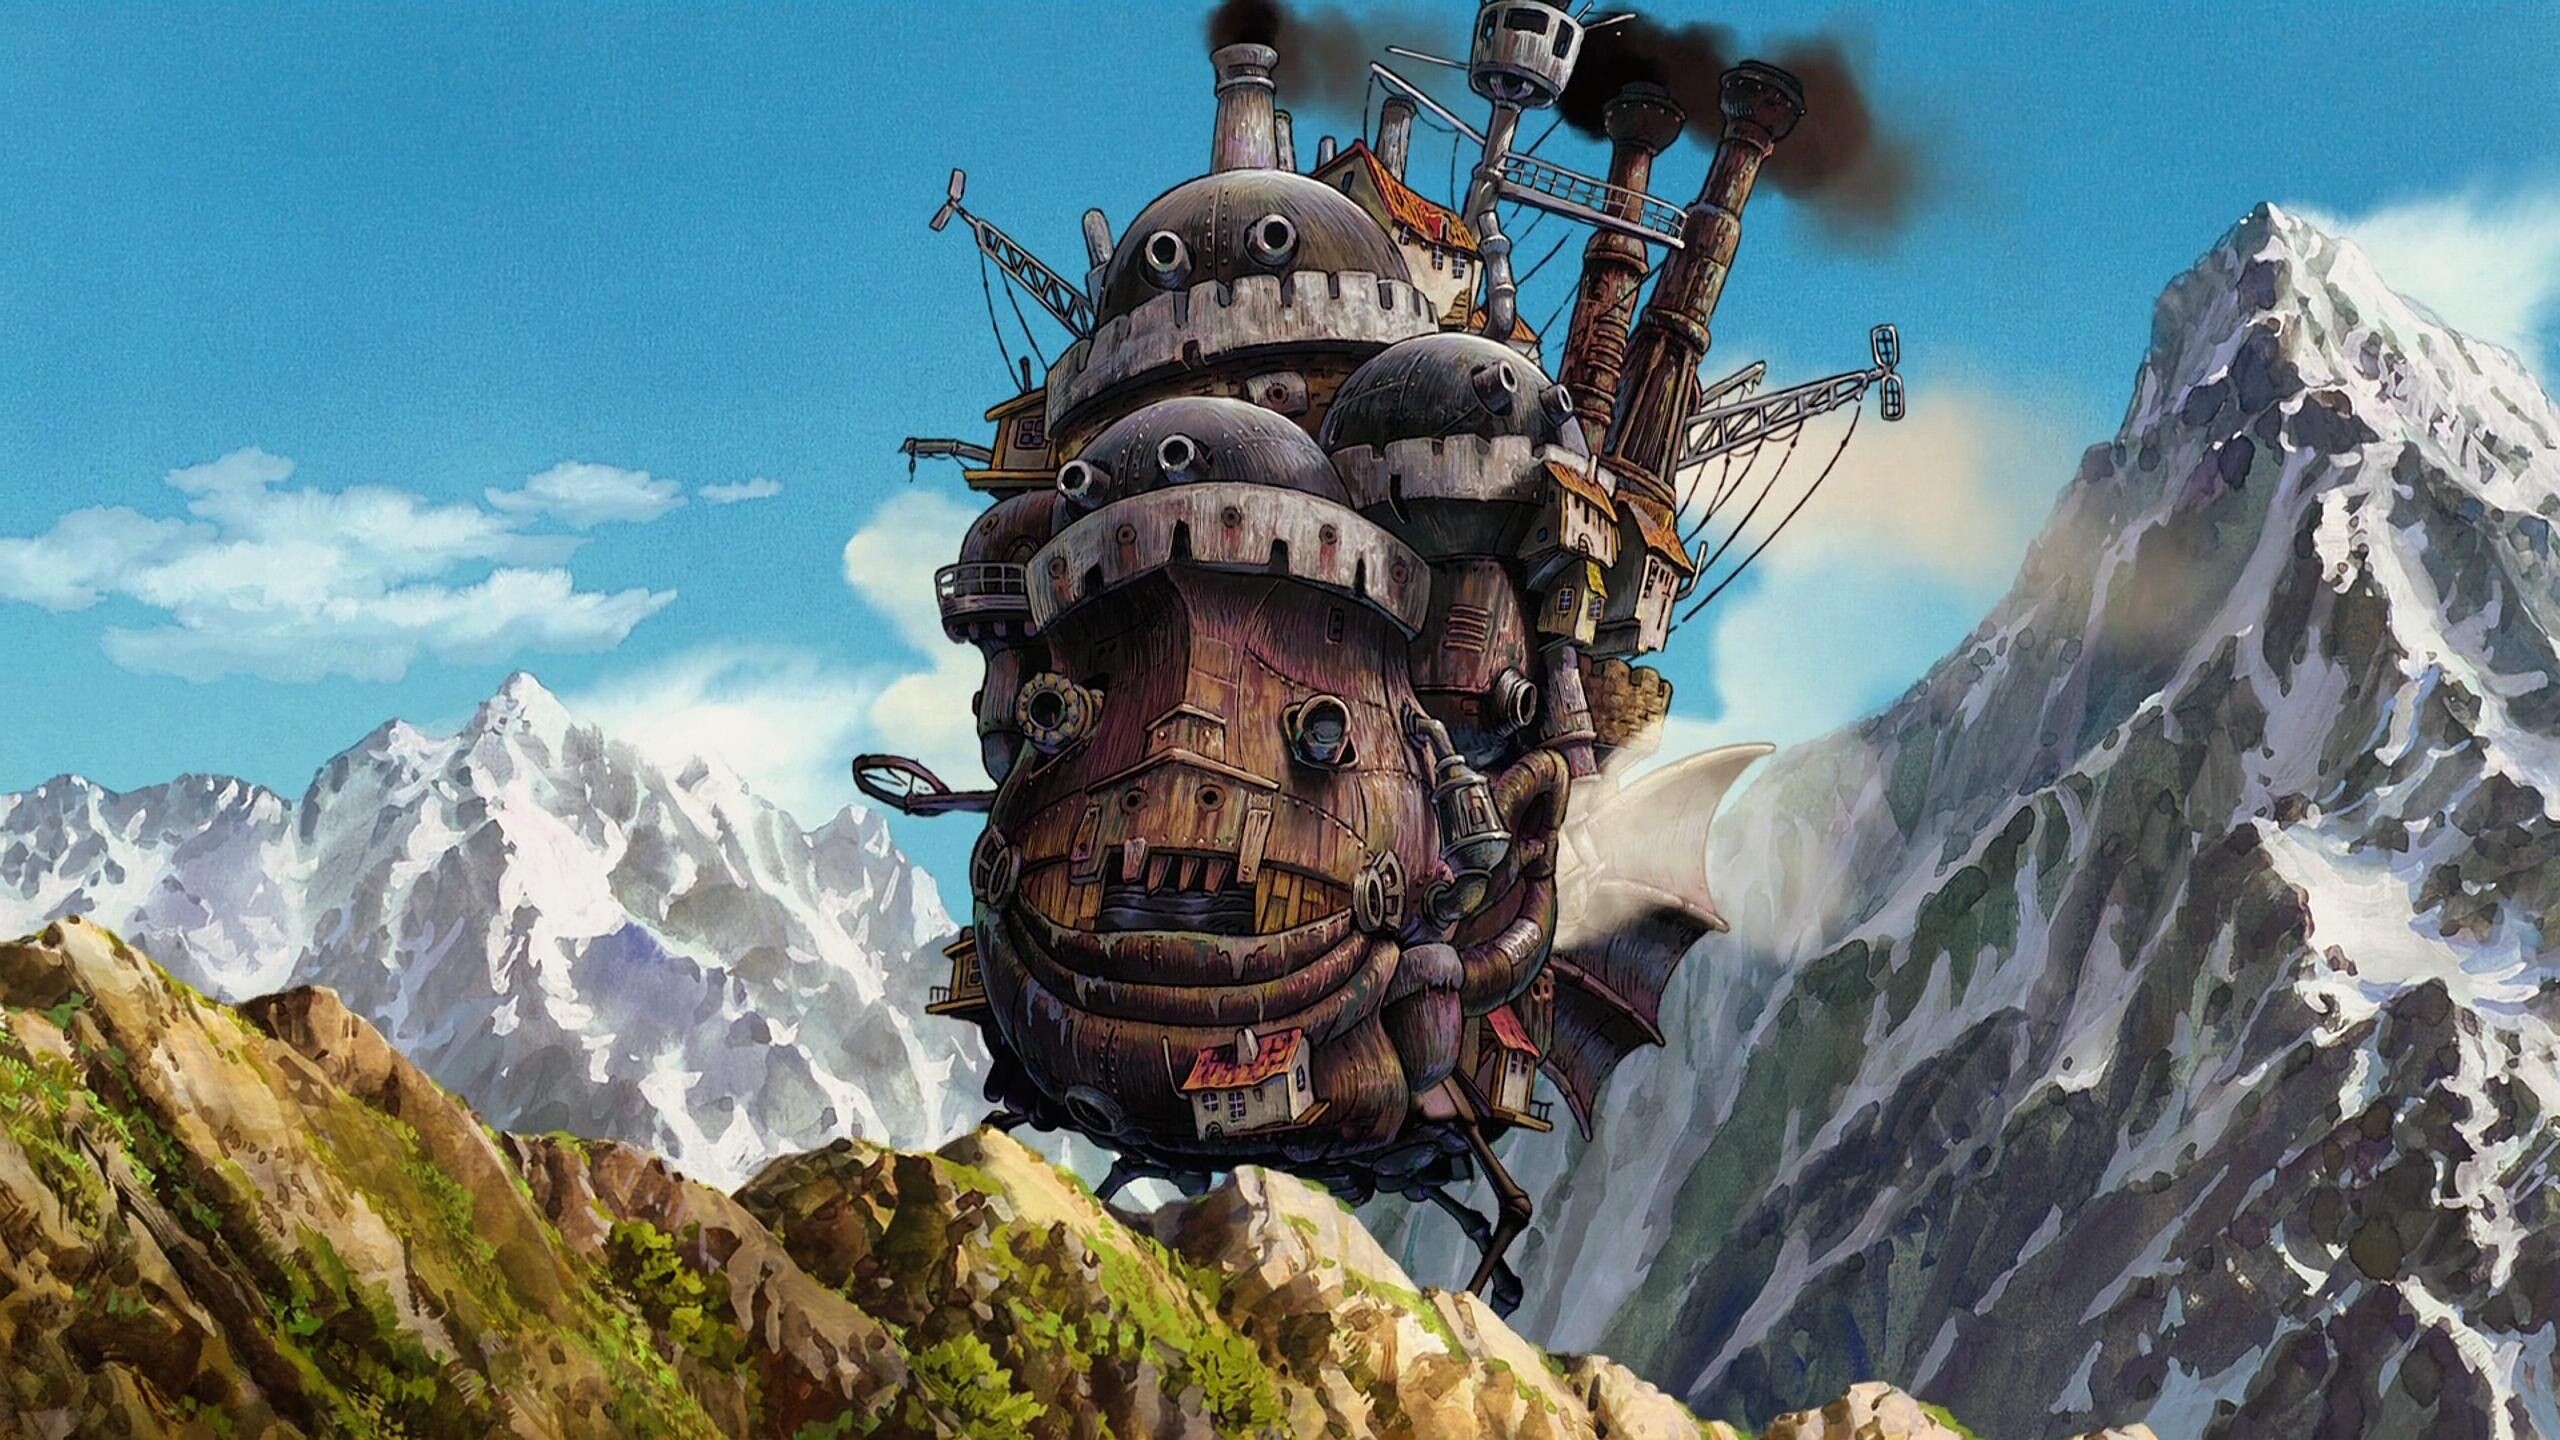 Studio Ghibli: The idea of Hayao Miyazaki, A Japanese animator, director, producer, screenwriter, author, and manga artist. 2560x1440 HD Wallpaper.